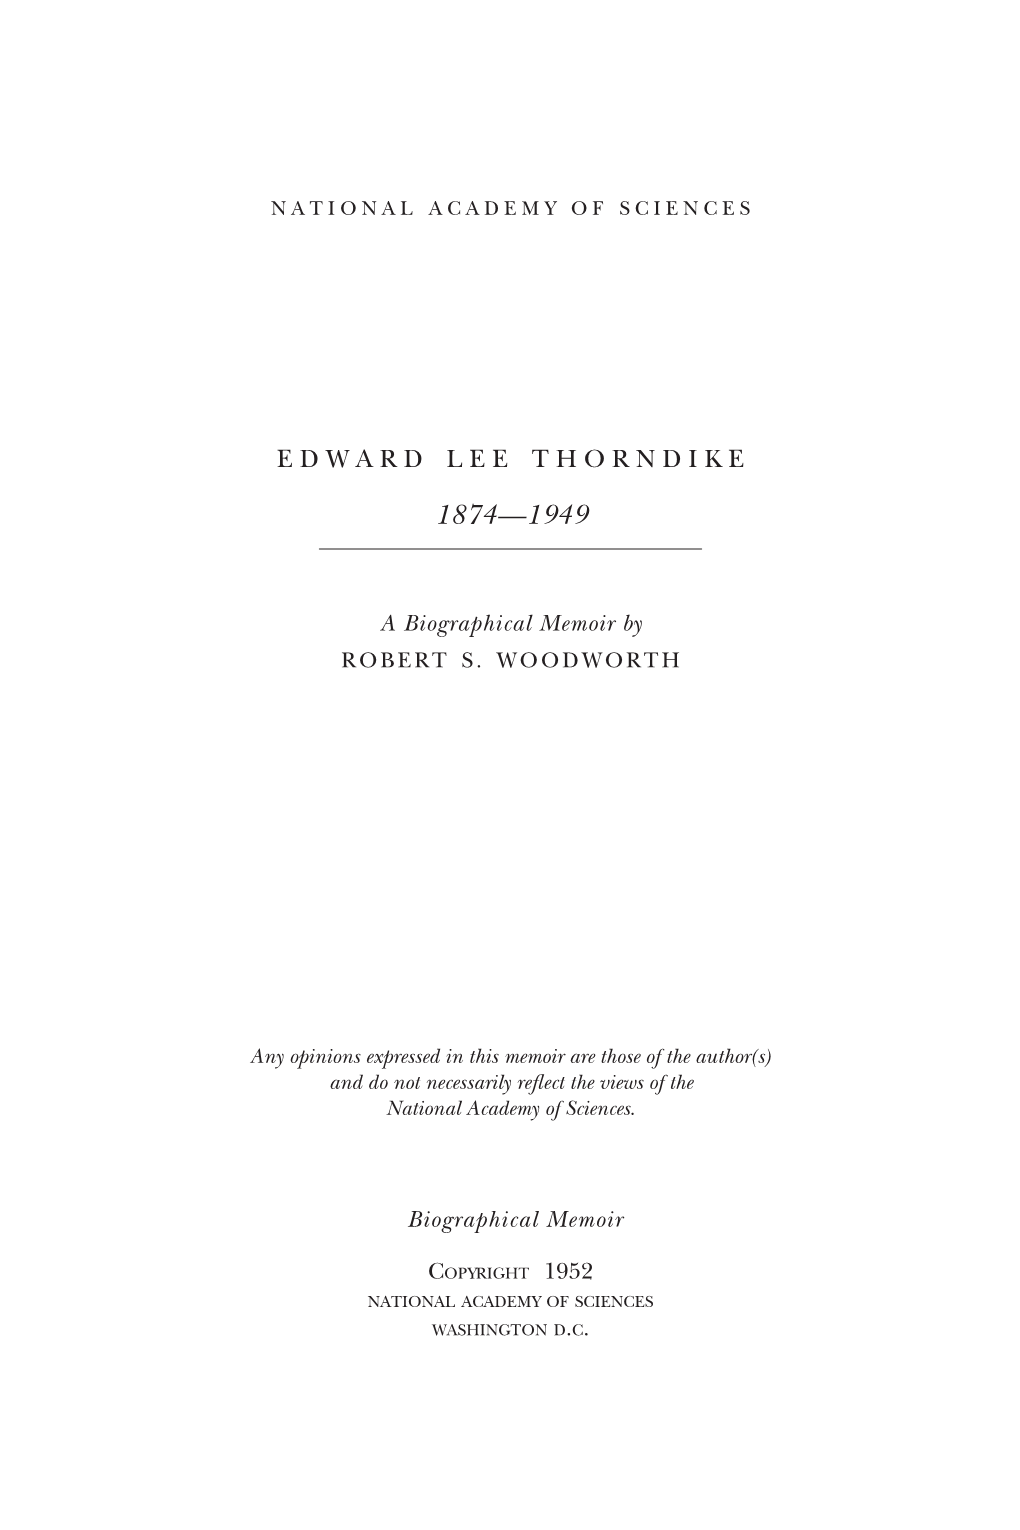 Edward Lee Thorndike: a Biographical Memoir